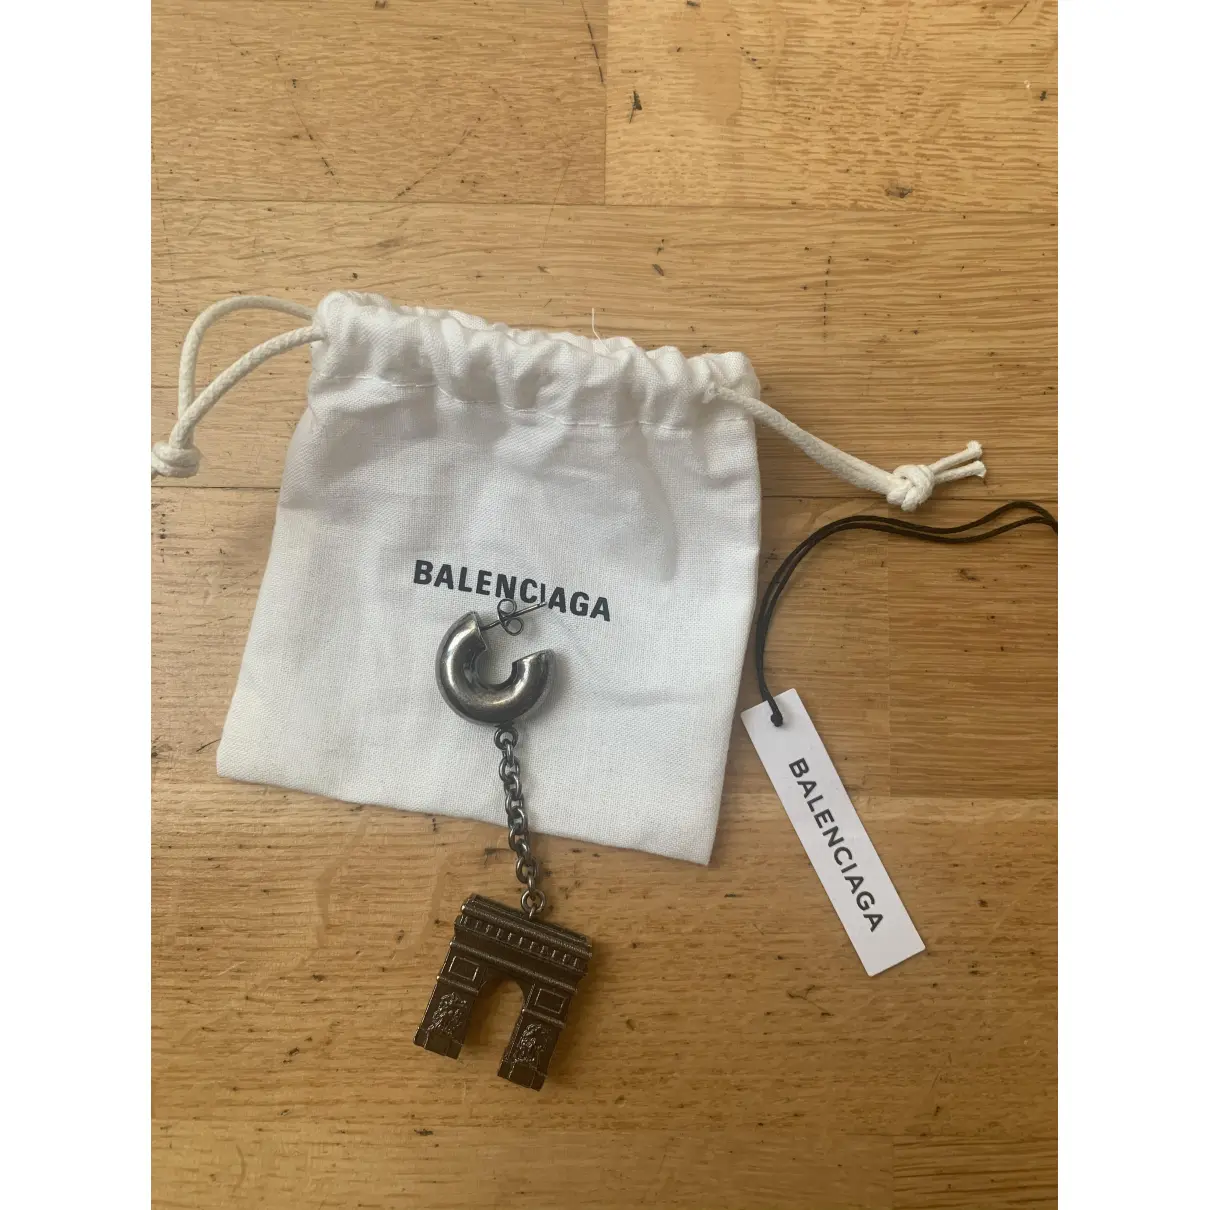 Buy Balenciaga Earrings online